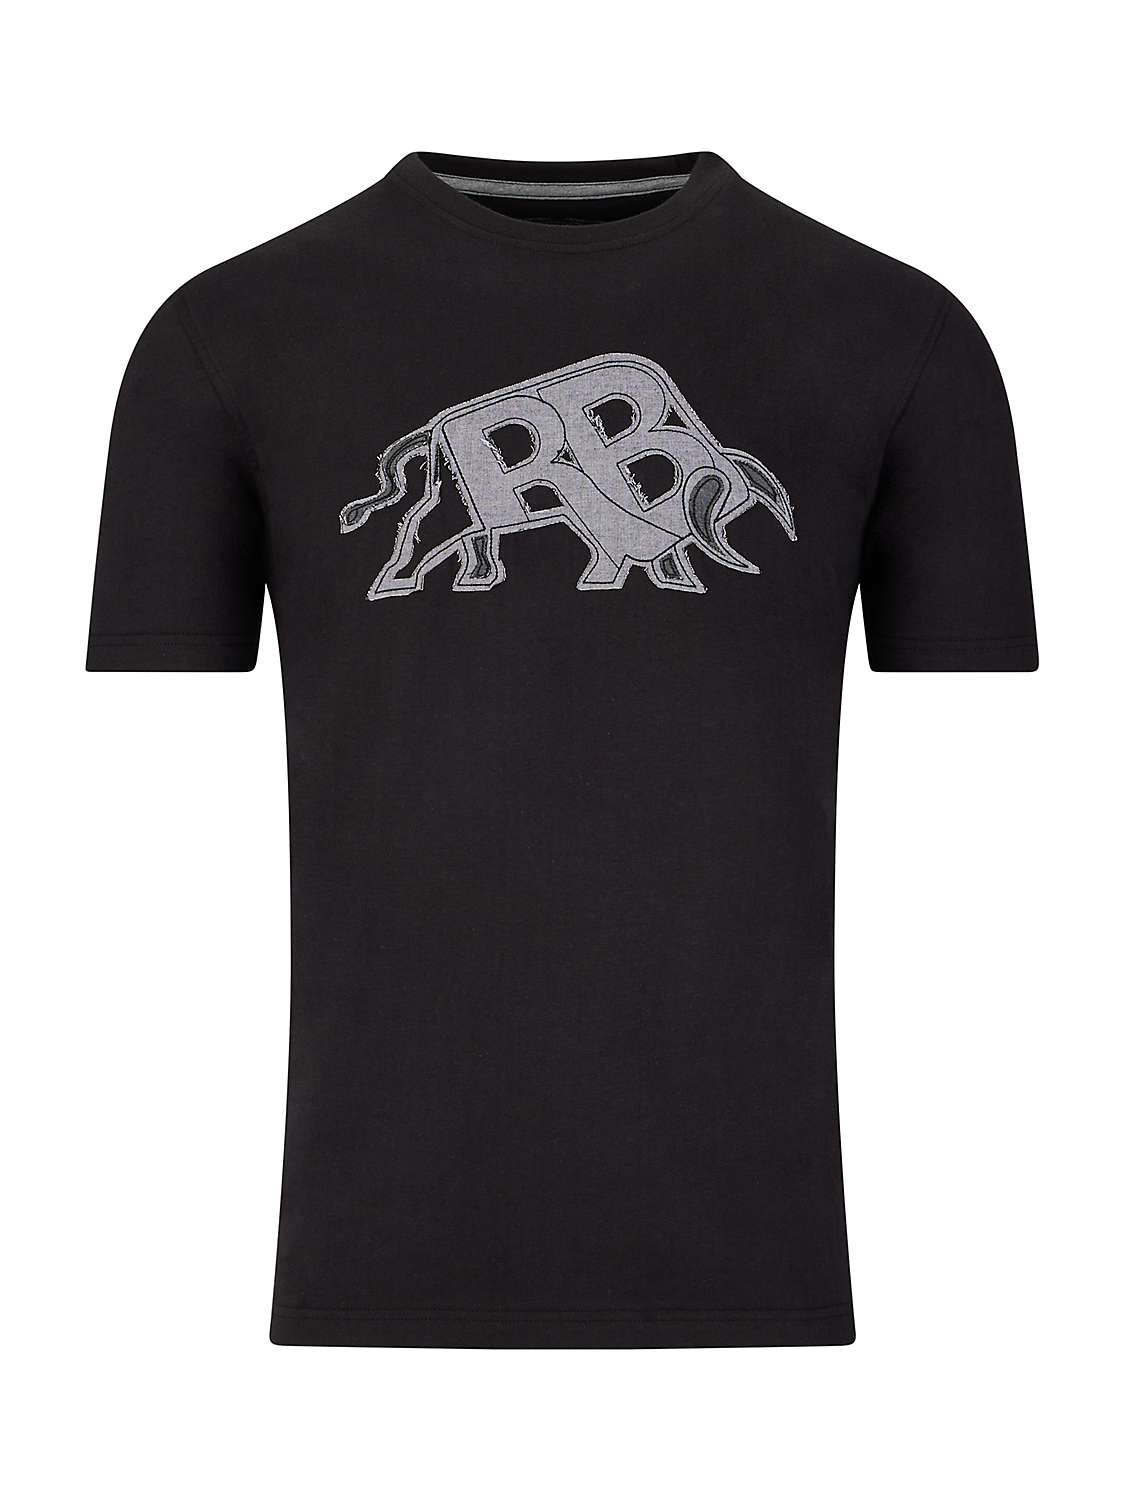 Raging Bull Applique Bull T-Shirt, Black at John Lewis & Partners